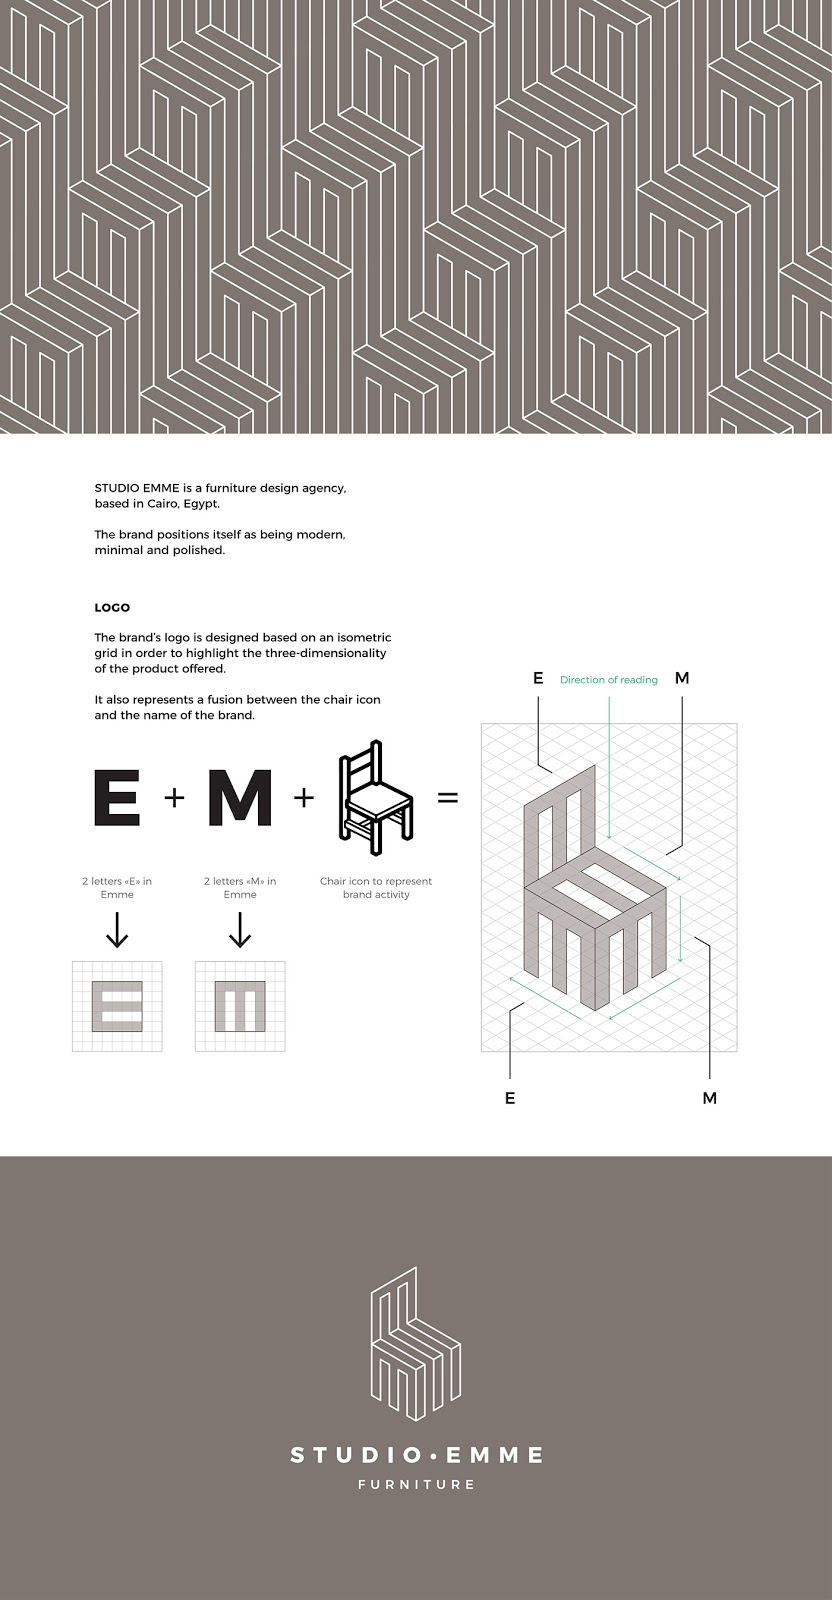 家具设计公司Studio Emme品牌形象设计